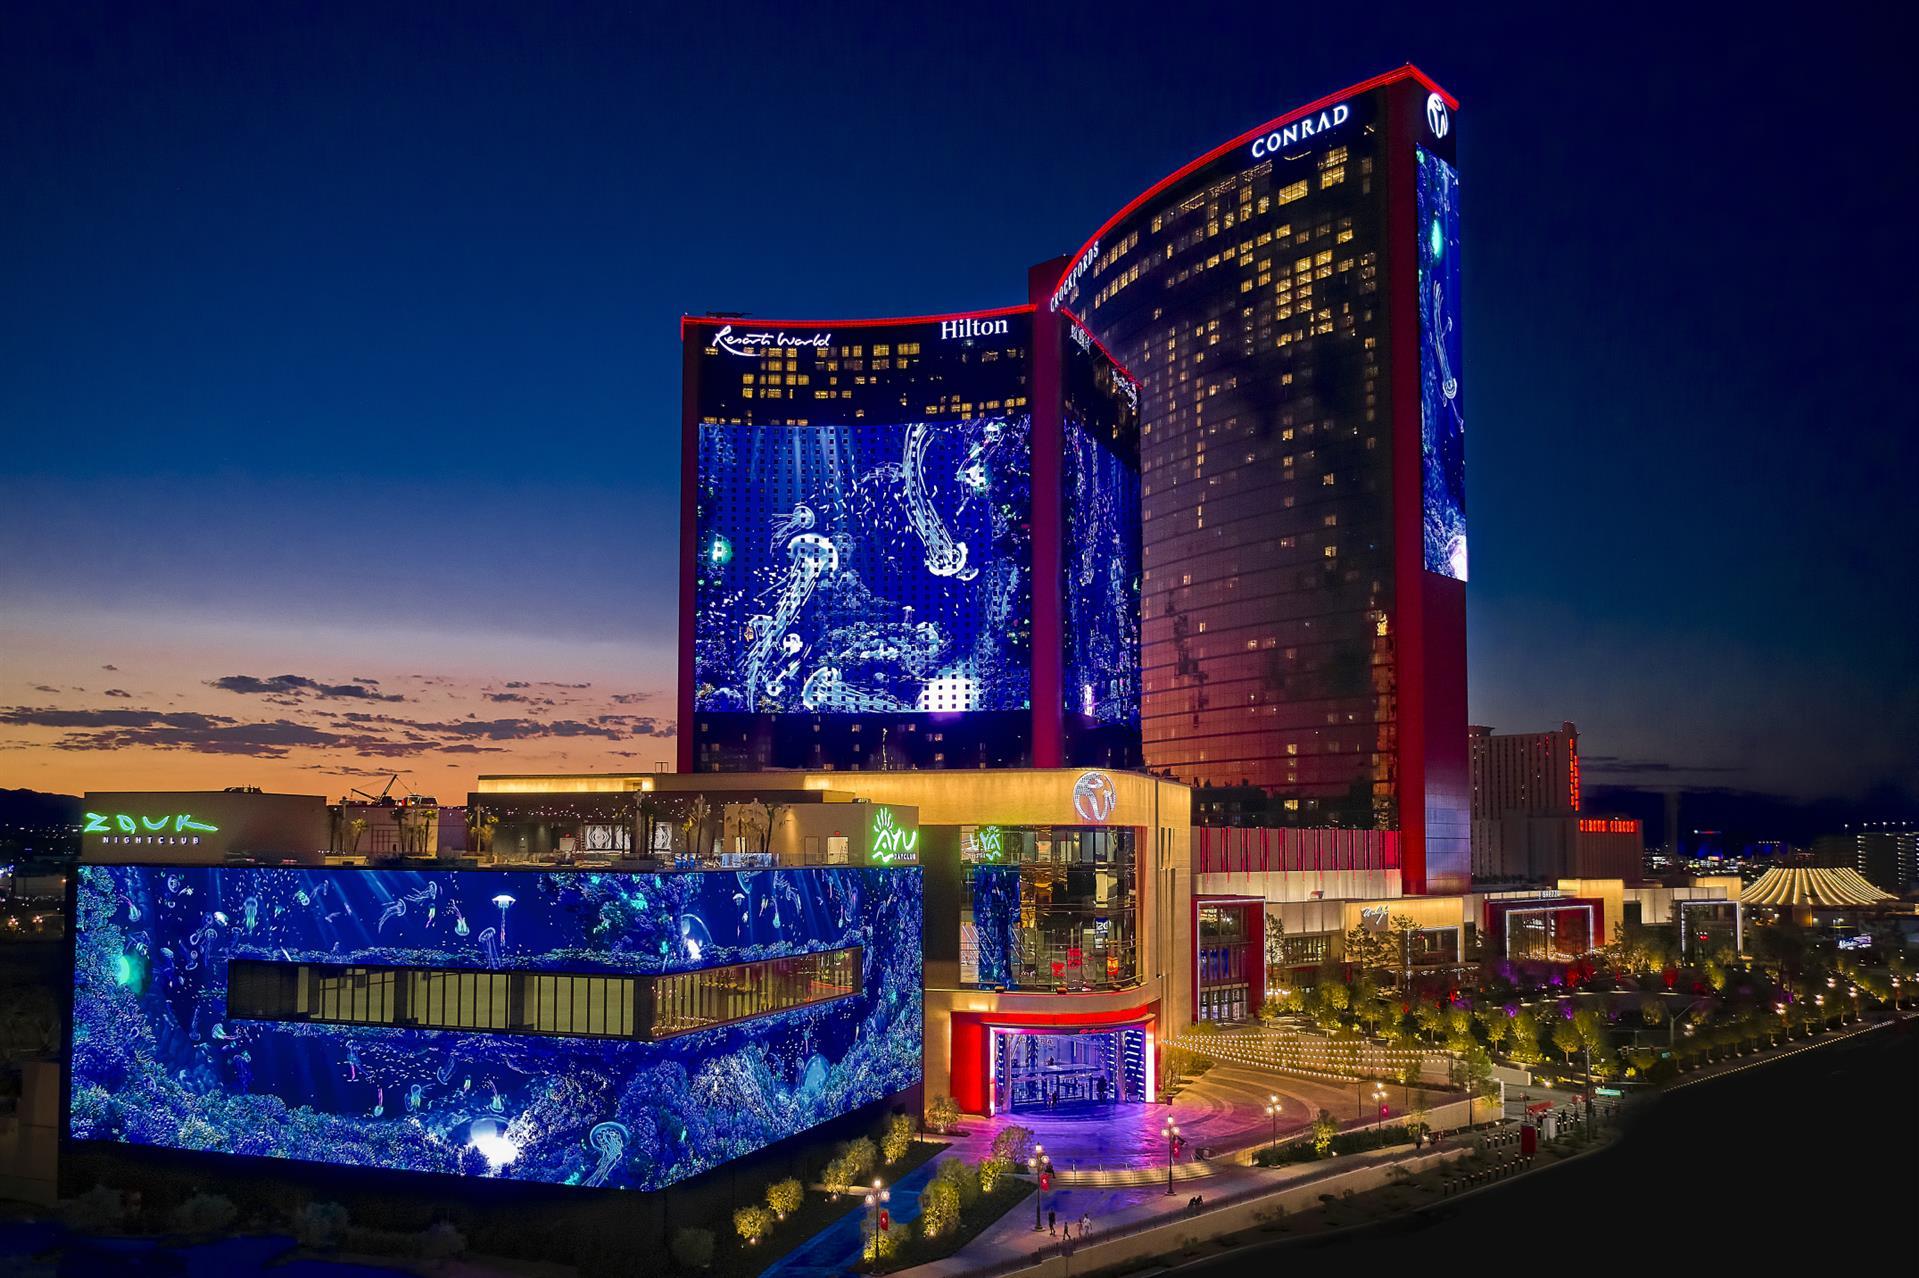 Resorts World Las Vegas Hilton | Conrad | Crockfords in Las Vegas, NV